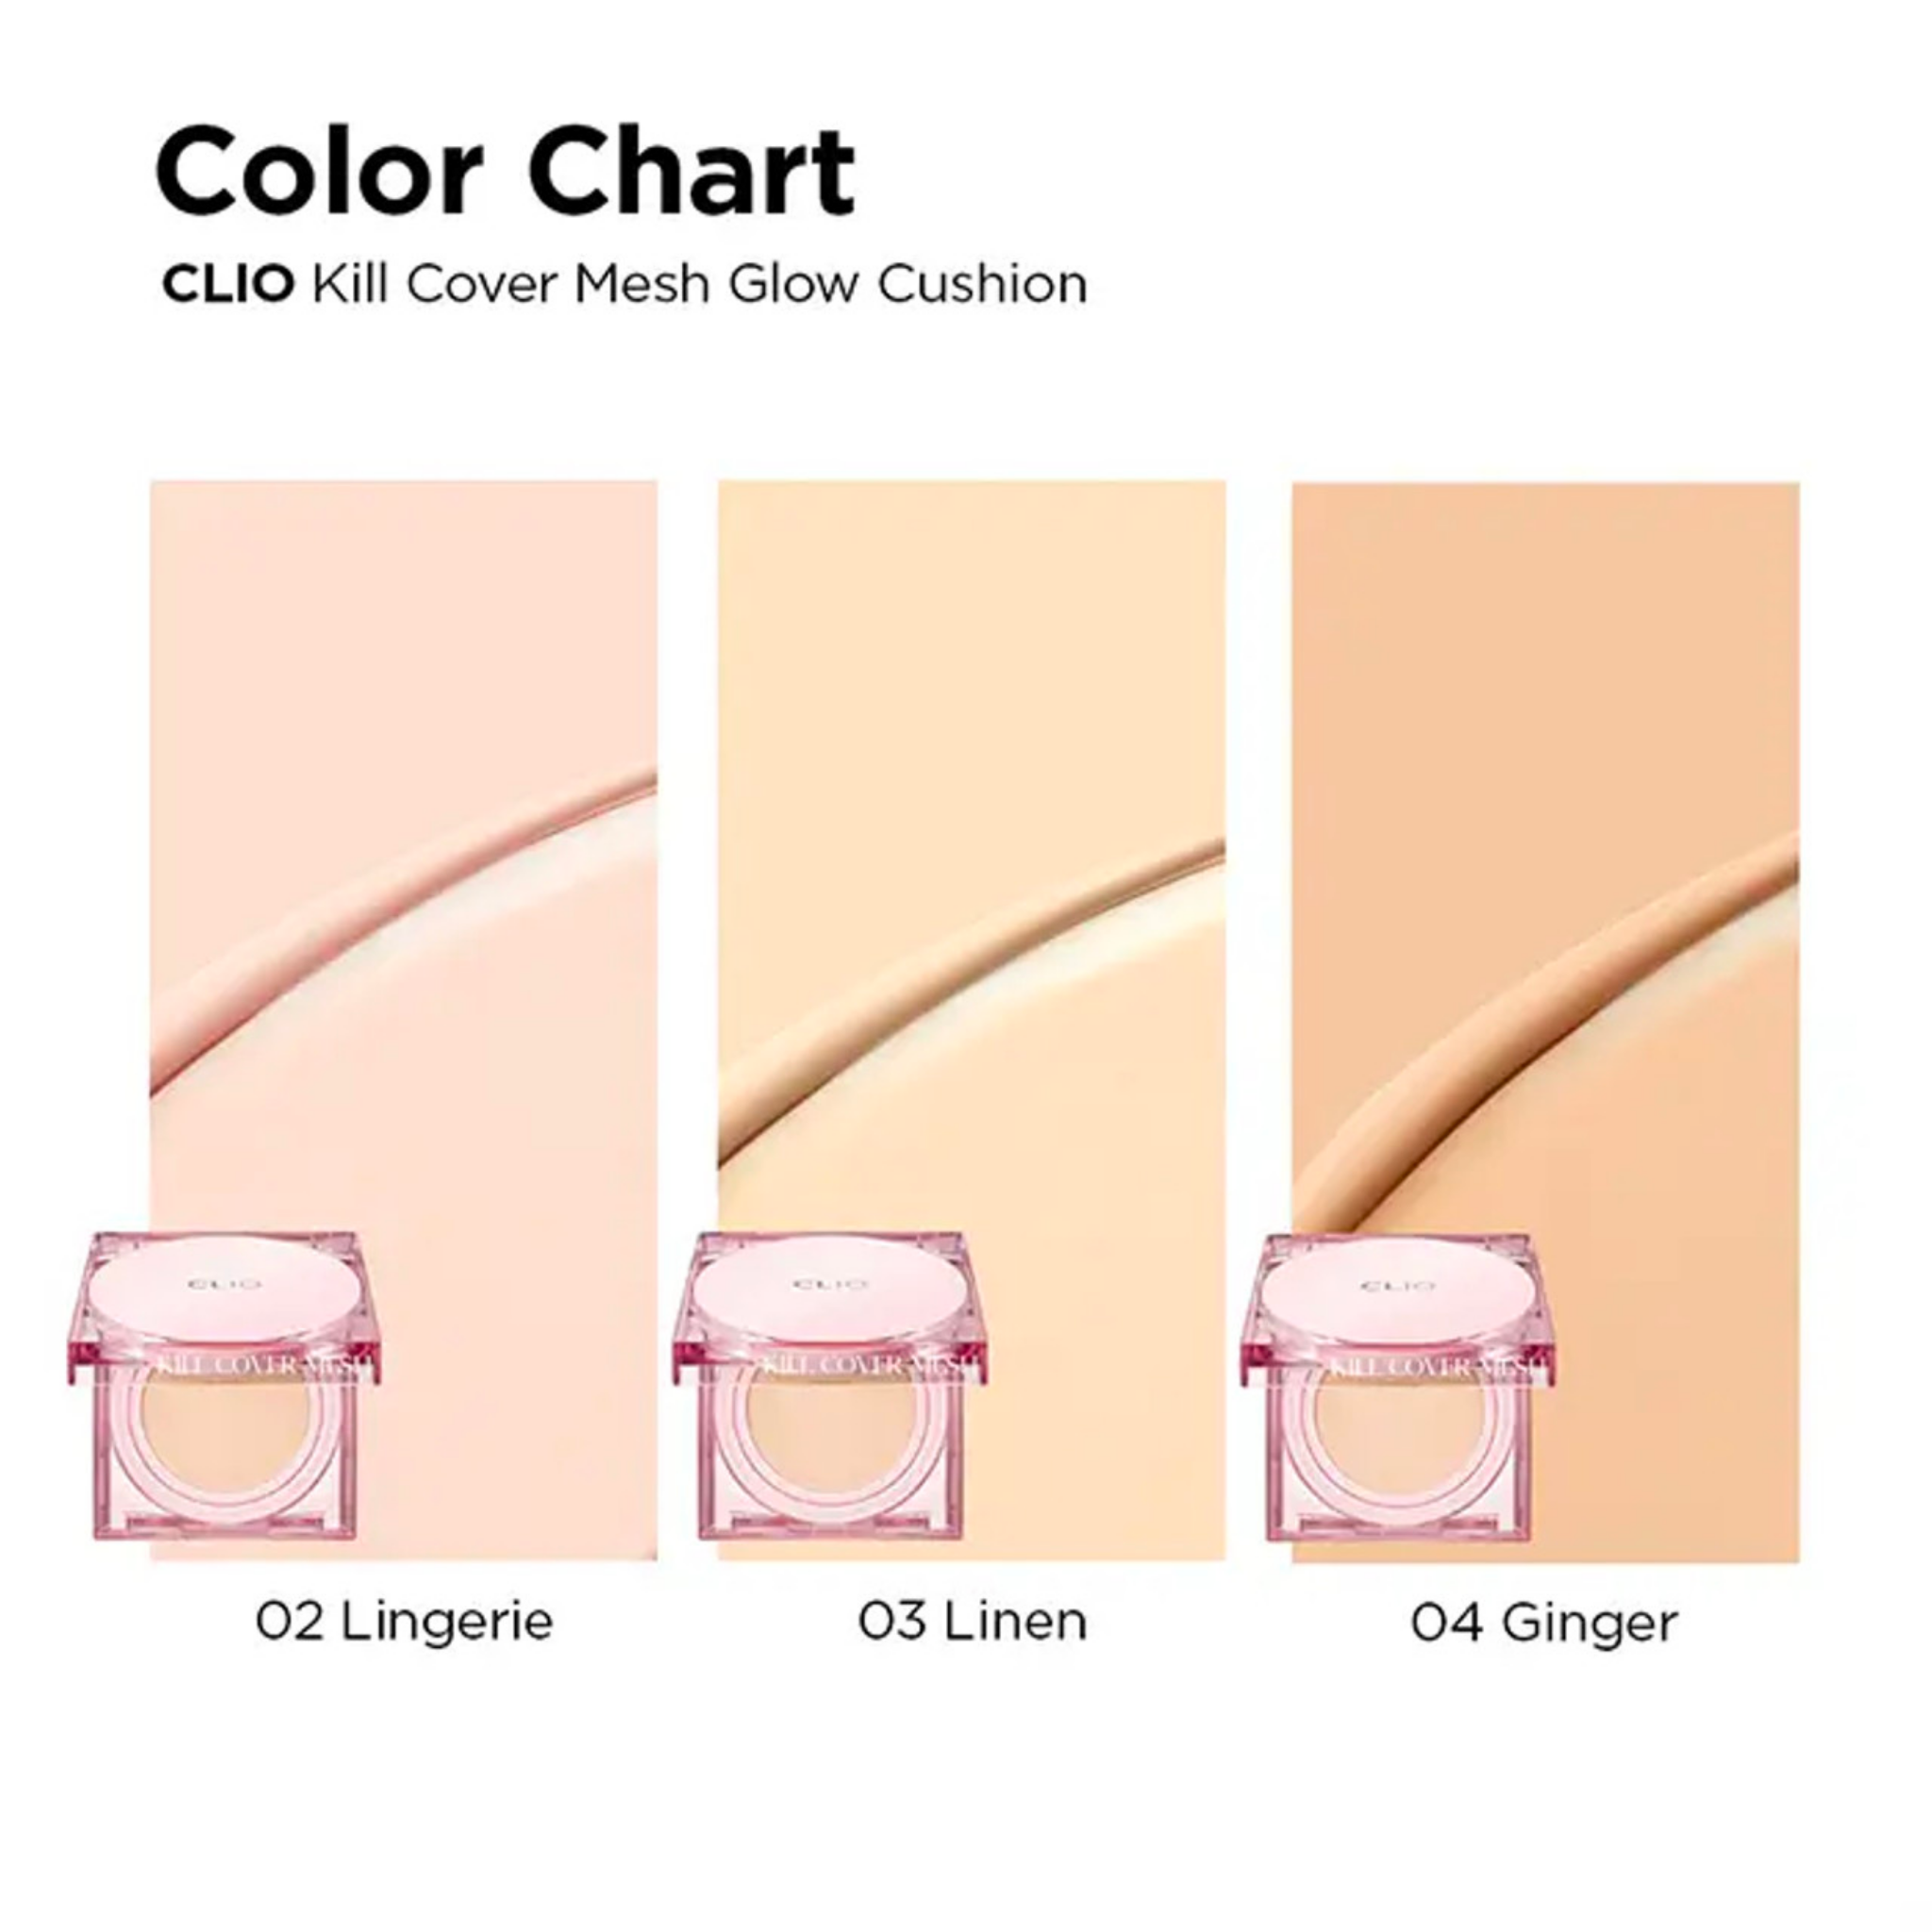 CLIO Kill Cover Mesh Glow Cushion (+Refill) (3 shades) shade range